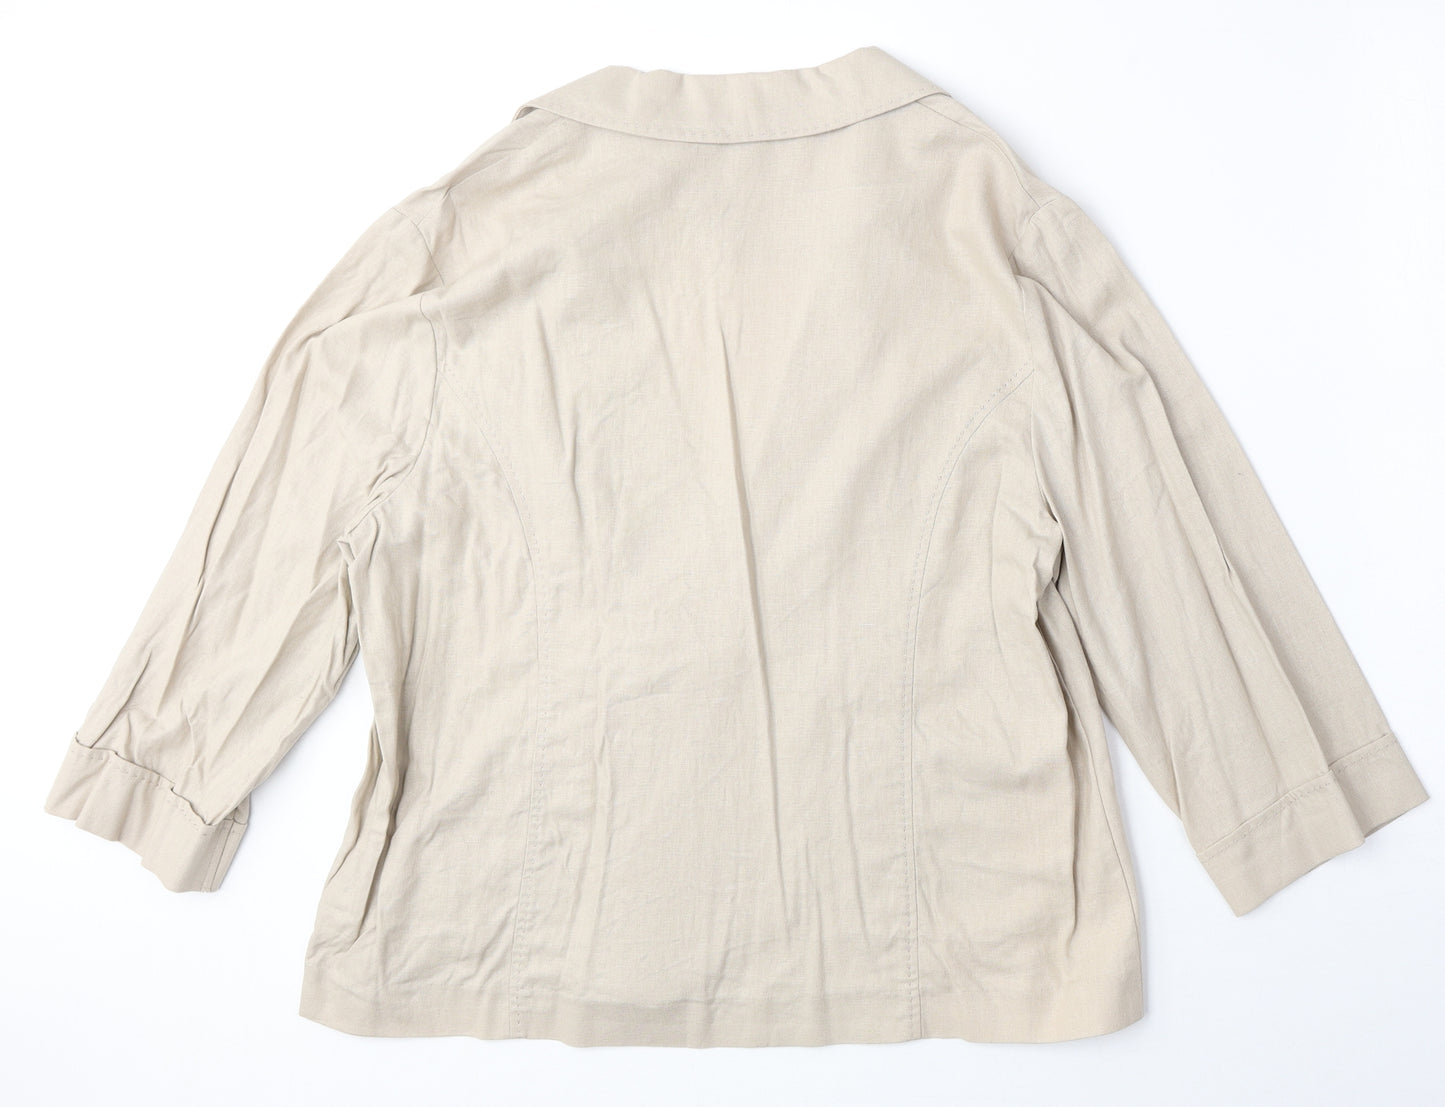 EWM Womens Beige Linen Jacket Blazer Size 18